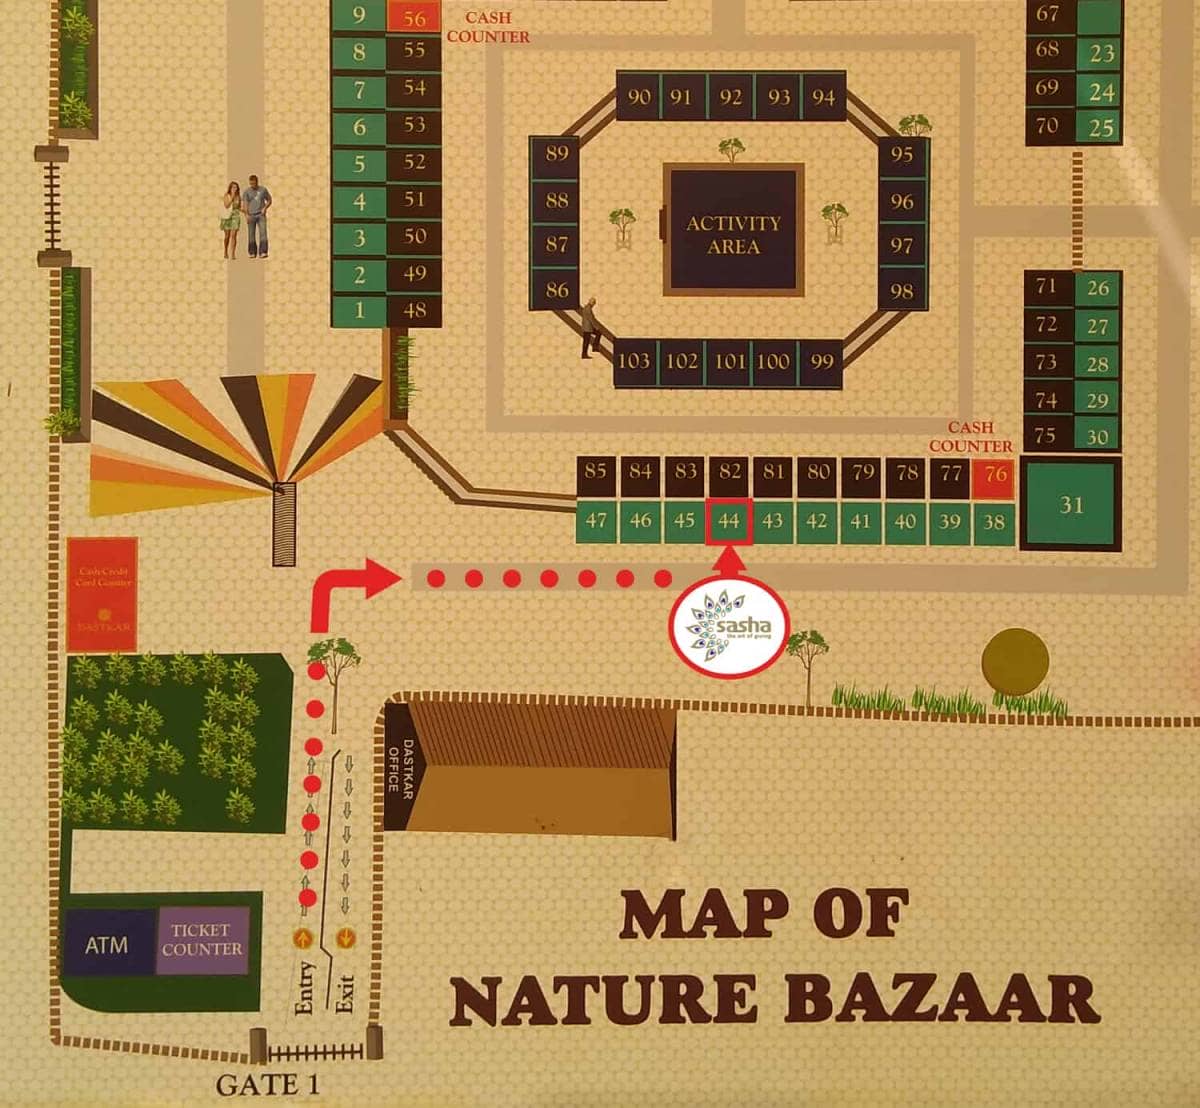 Nature Bazaar sitemap with directions to Sasha